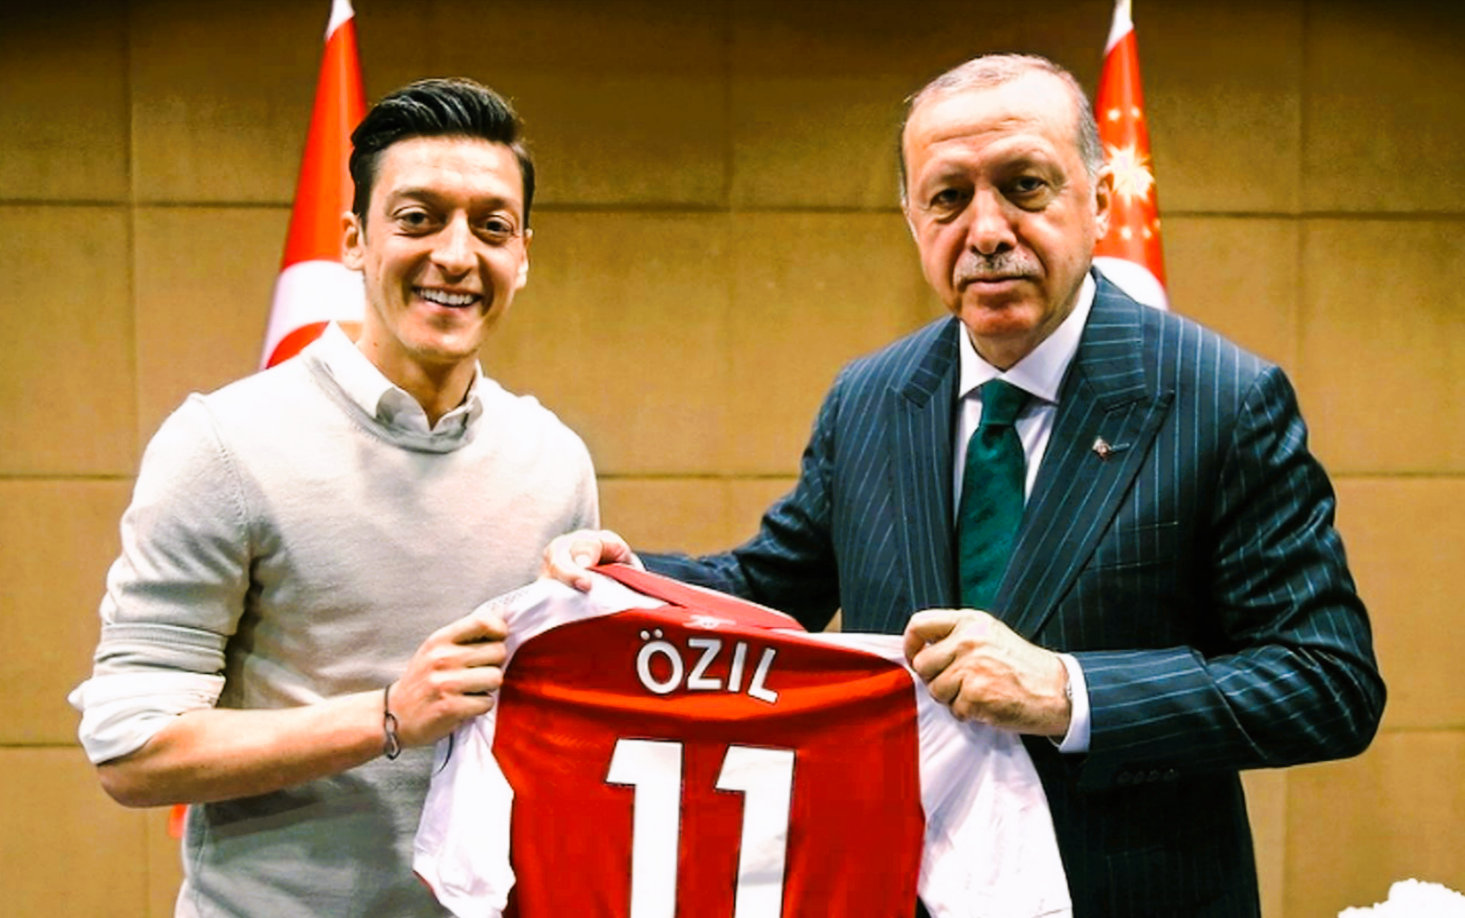 Skandal um Mesut Özil - Ehemaliger Nationalspieler postet bei Instagram Hass-Posts gegen Israel